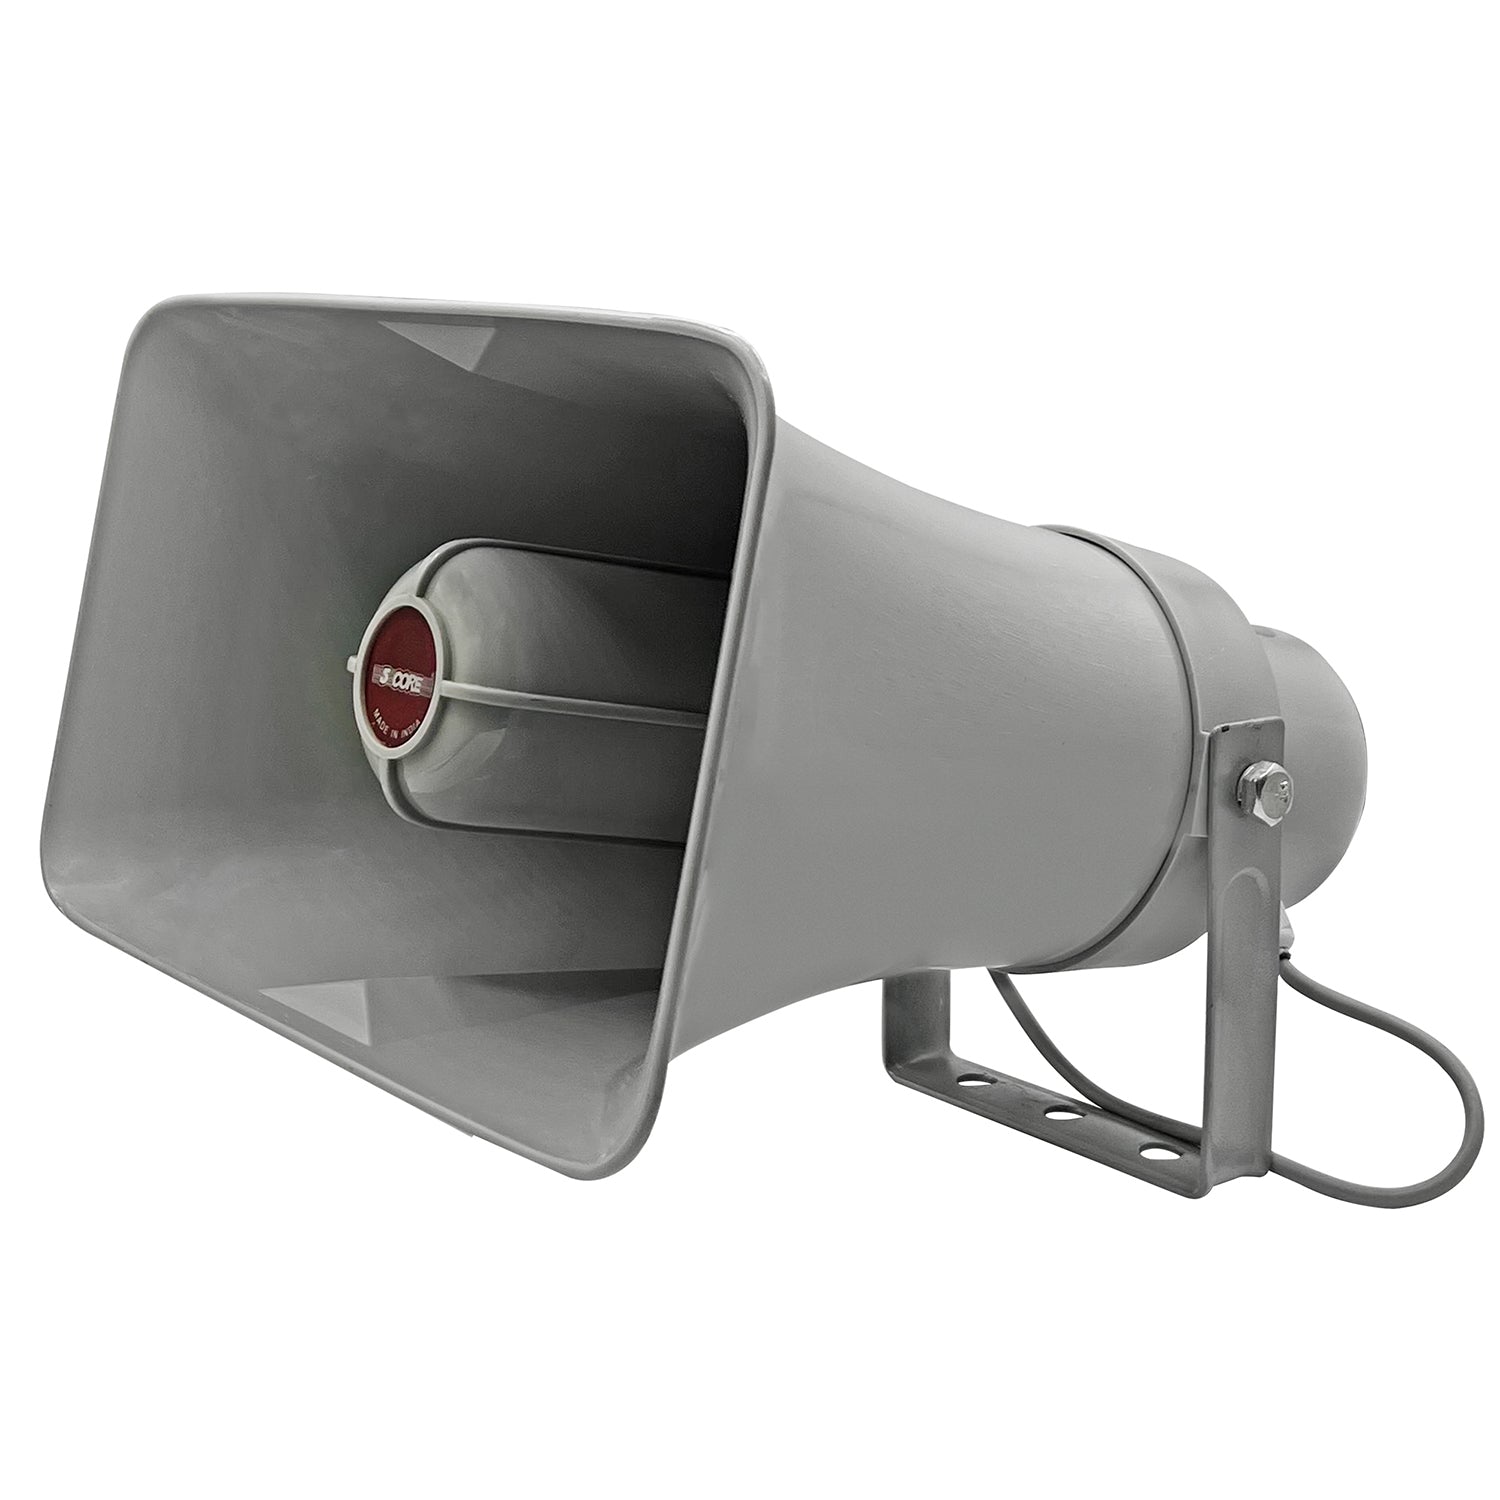 5 Core PA Horn Speaker • 6x10" Loudspeaker • 20W RMS 1000ft Range • Ambulance + Police + Fire Siren